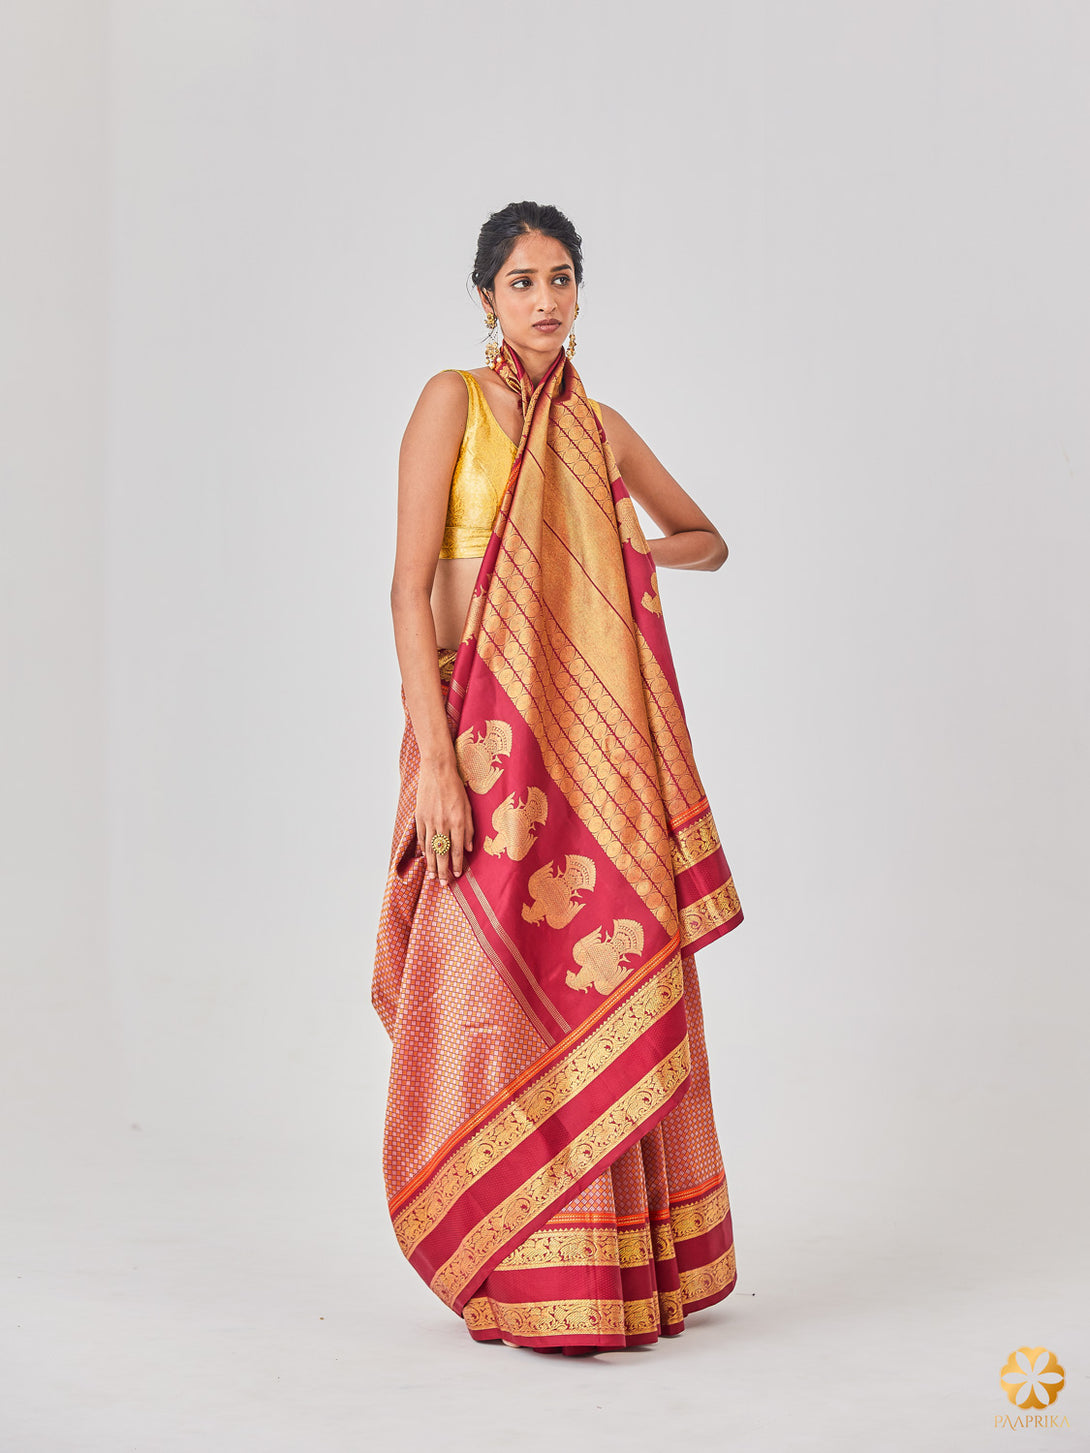 Beautiful Drape of Regal Maroon Kanjivaram Saree - Luxurious Silk Fabric with Traditional Motifs.